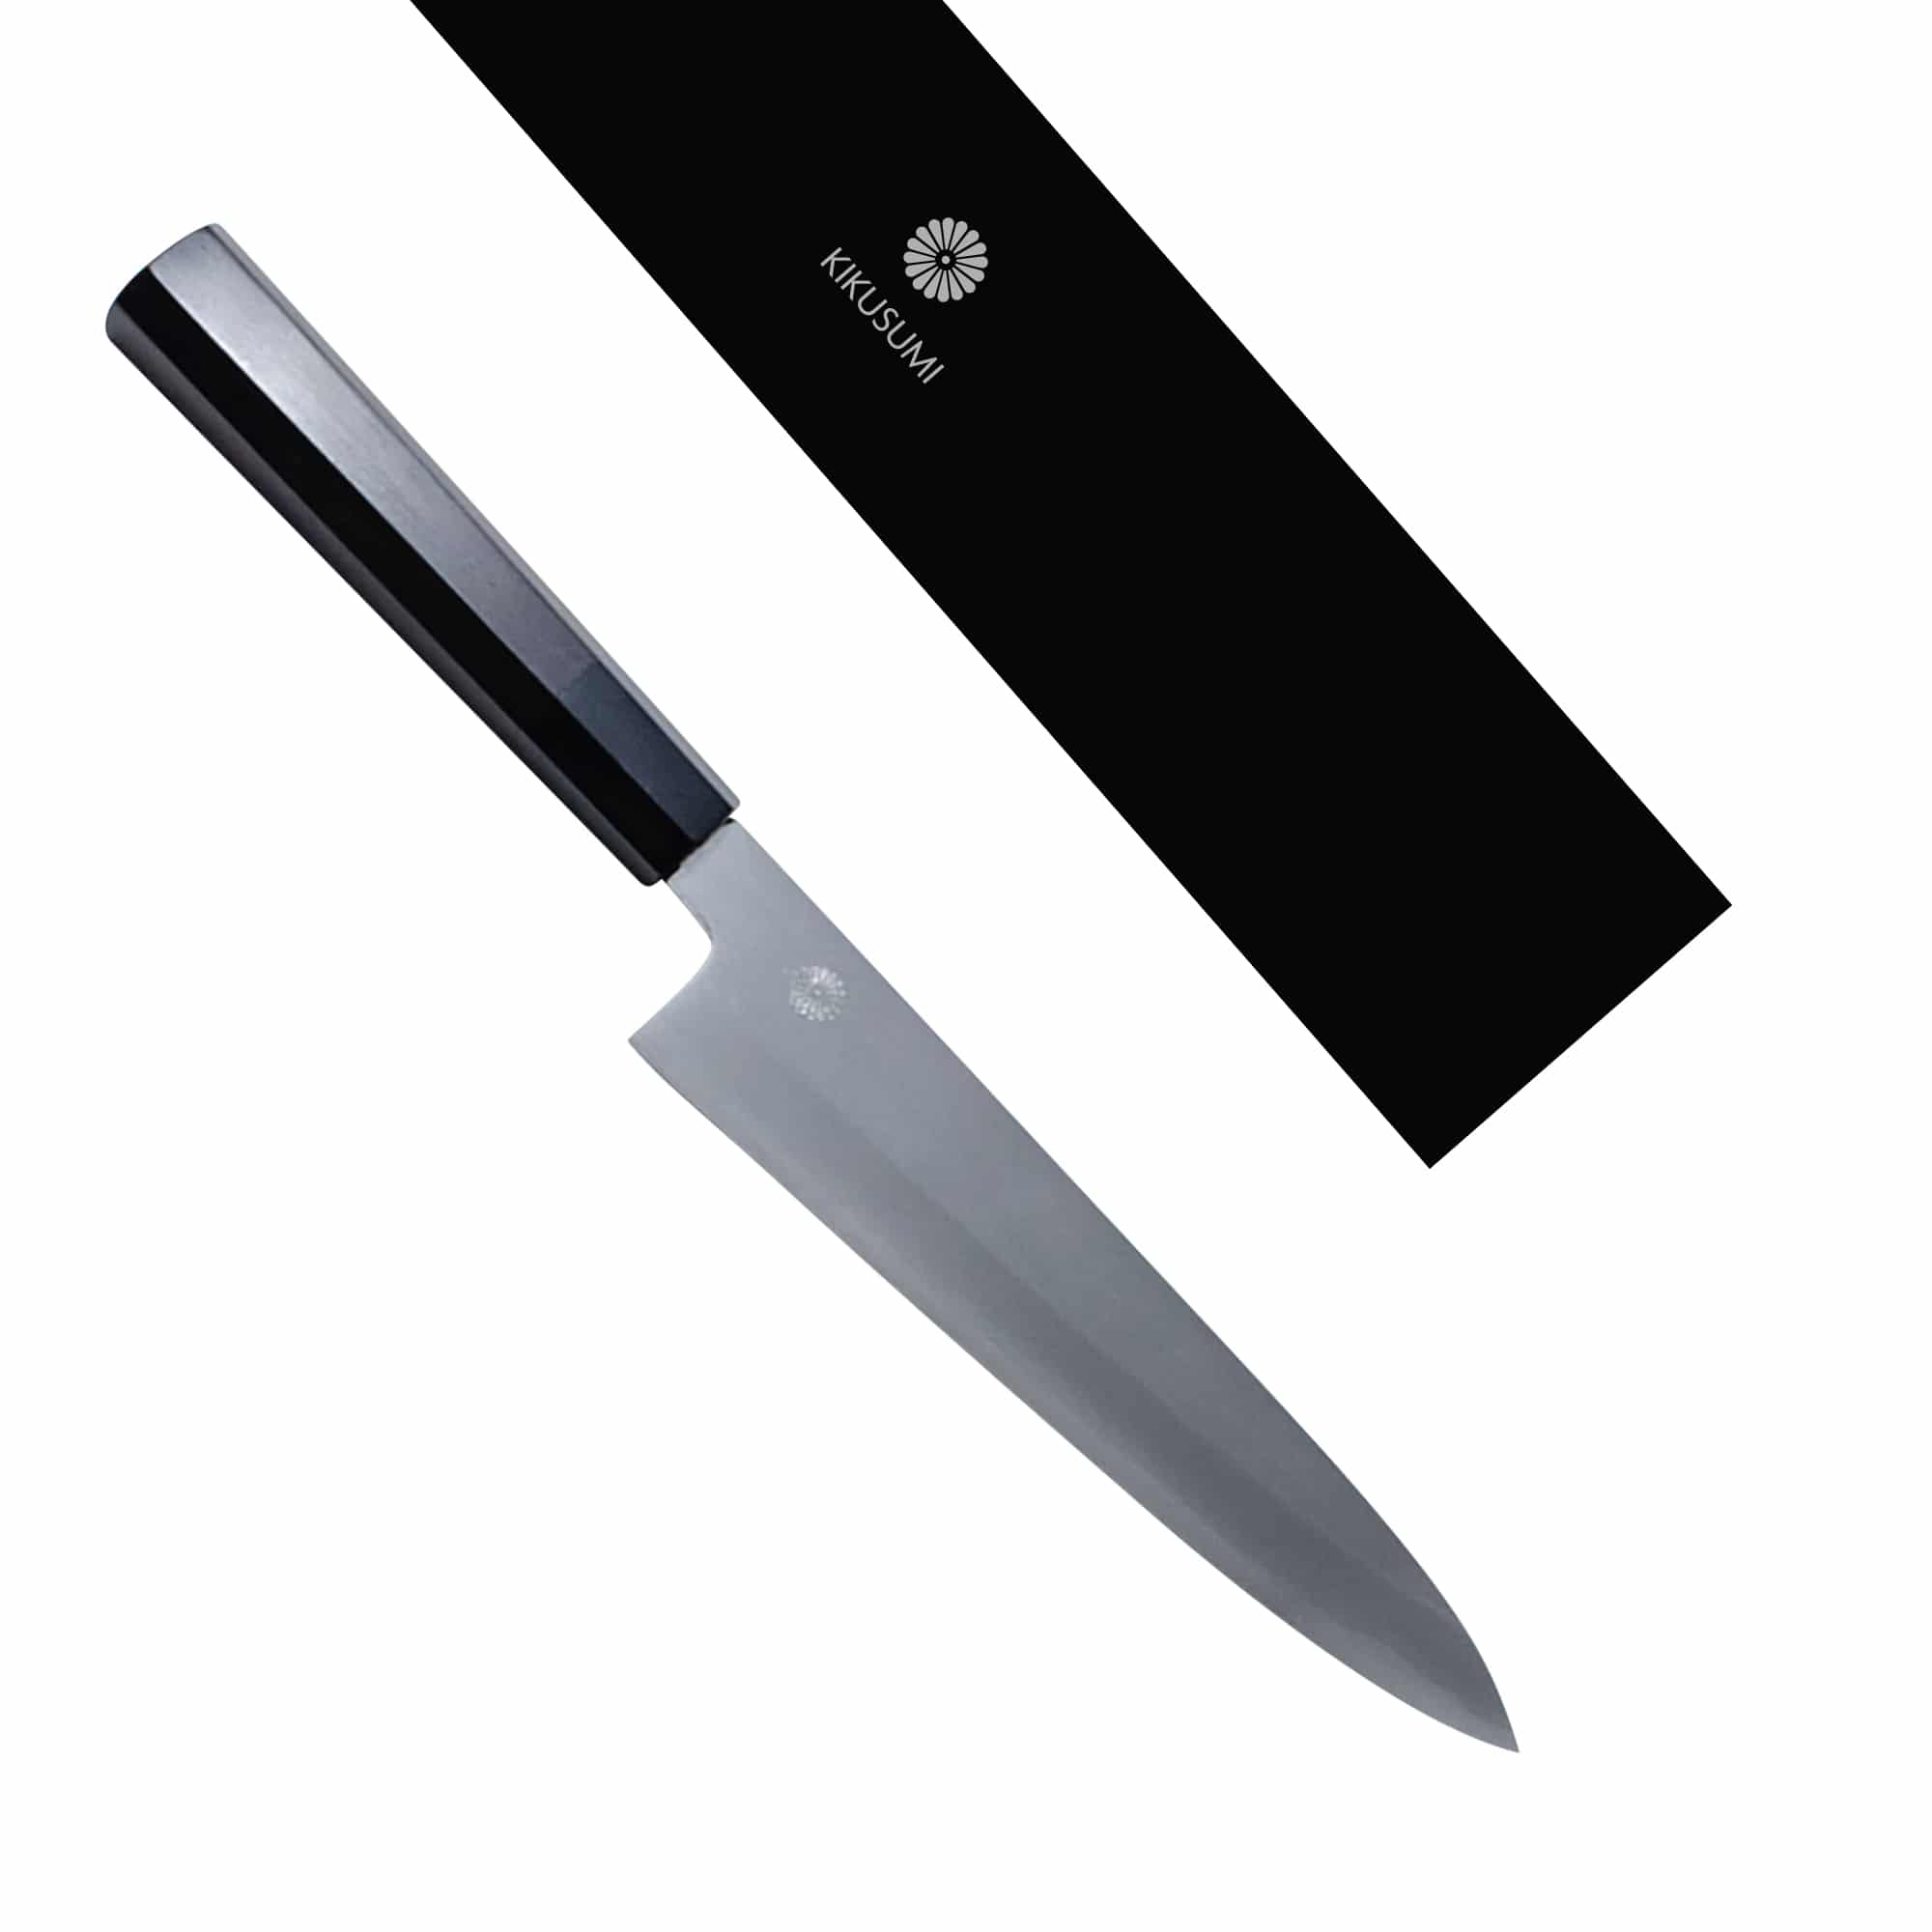 Kikusumi Black Ceramic Collection 6 Piece Chef Knife Gift Set Bundle - SUMI  Black Handle - Kikusumi Knife SHOP